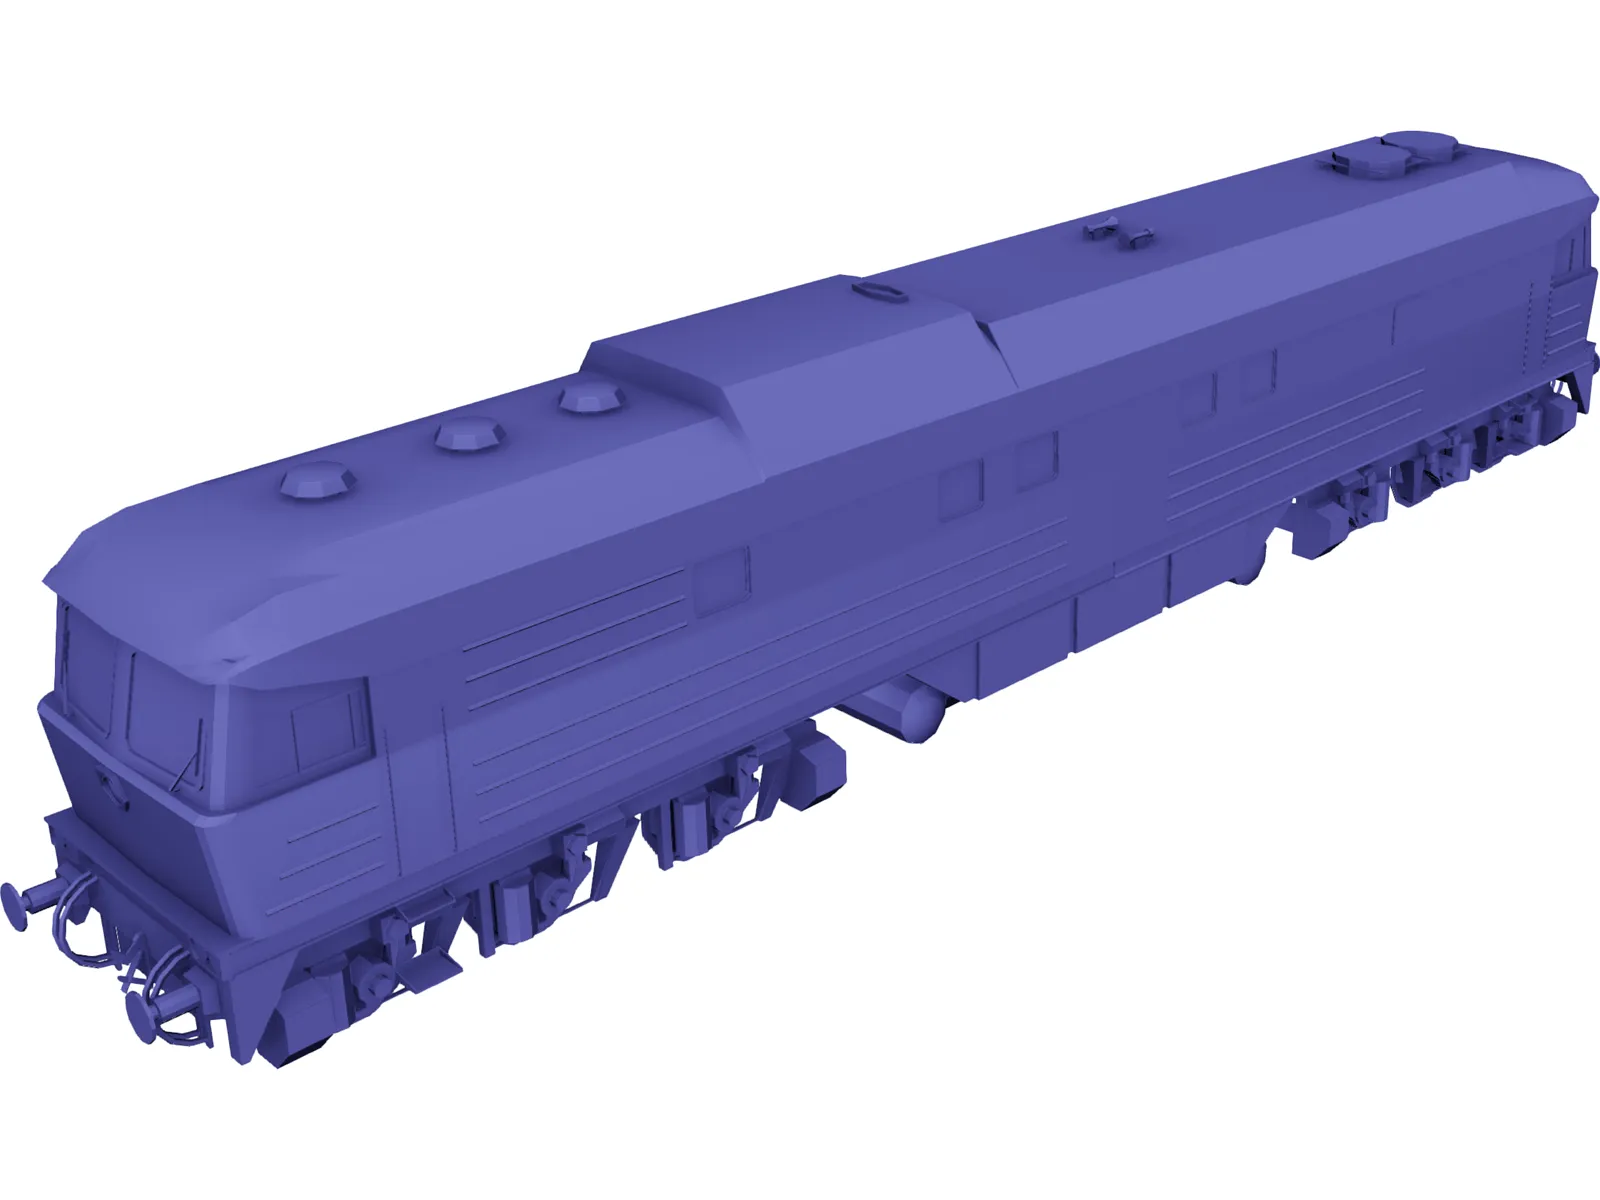 BR232 Locomotive 3D Model